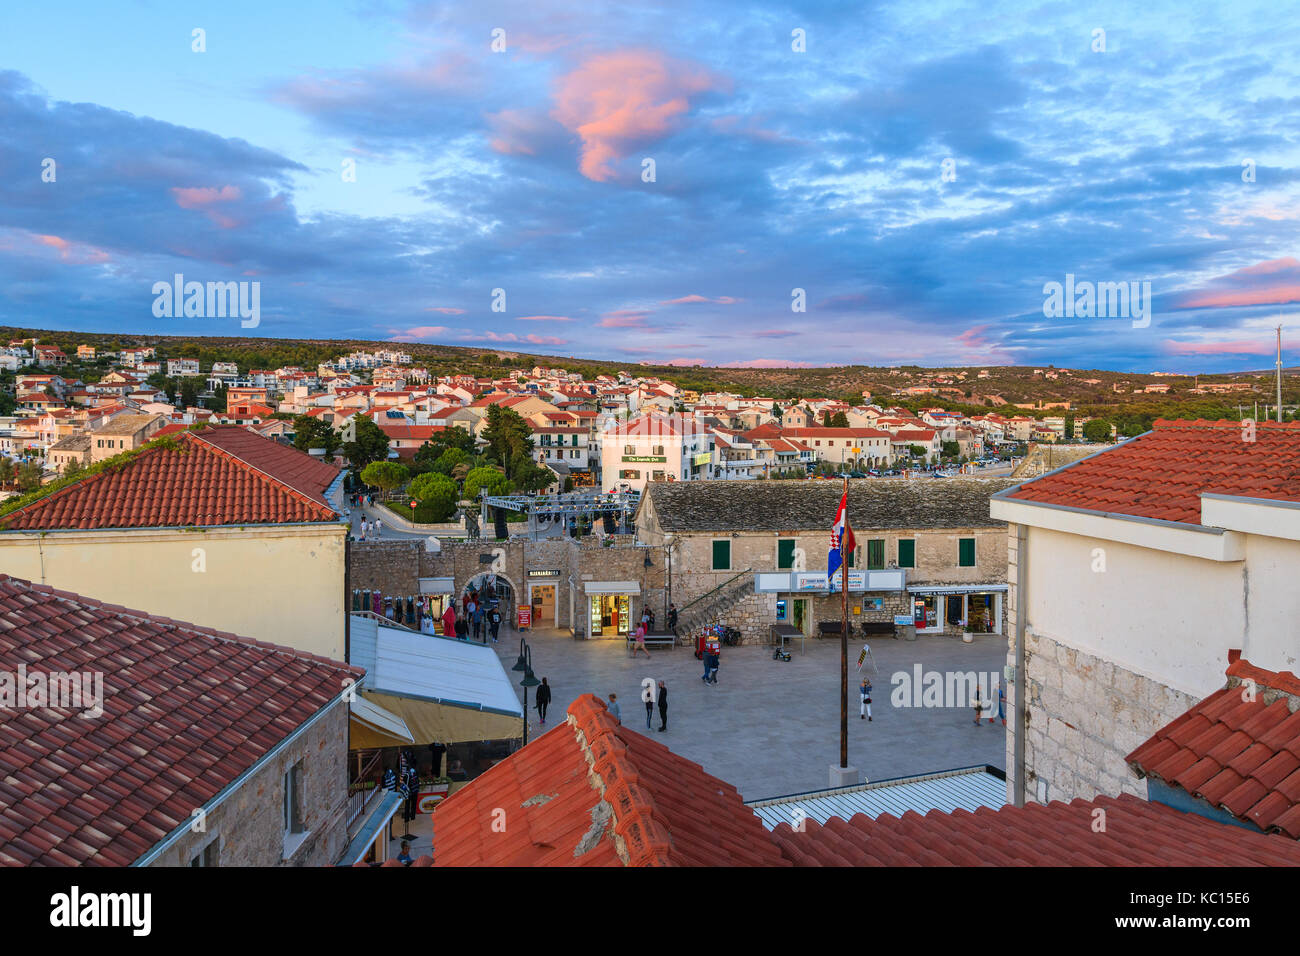 PRIMOSTEN, CROATIA - SEP 3, 2017: View of Primosten old town square at sunset time, Dalmatia, Croatia. Stock Photo